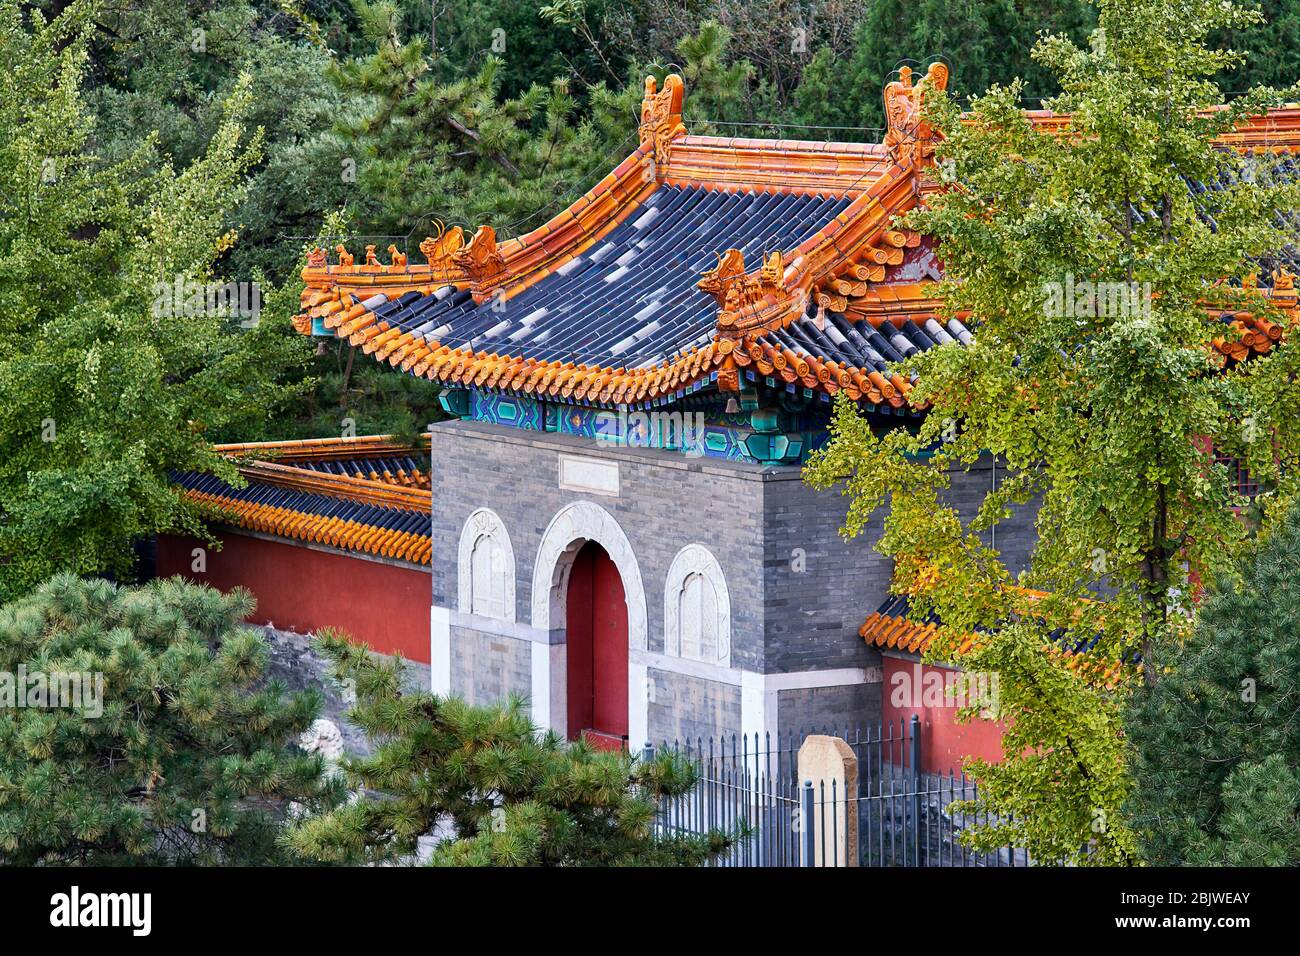 Beijing / China - October 11, 2018: Entrance to the old temple at Juyongguan (Juyong Pass) of the Great Wall of China Stock Photo